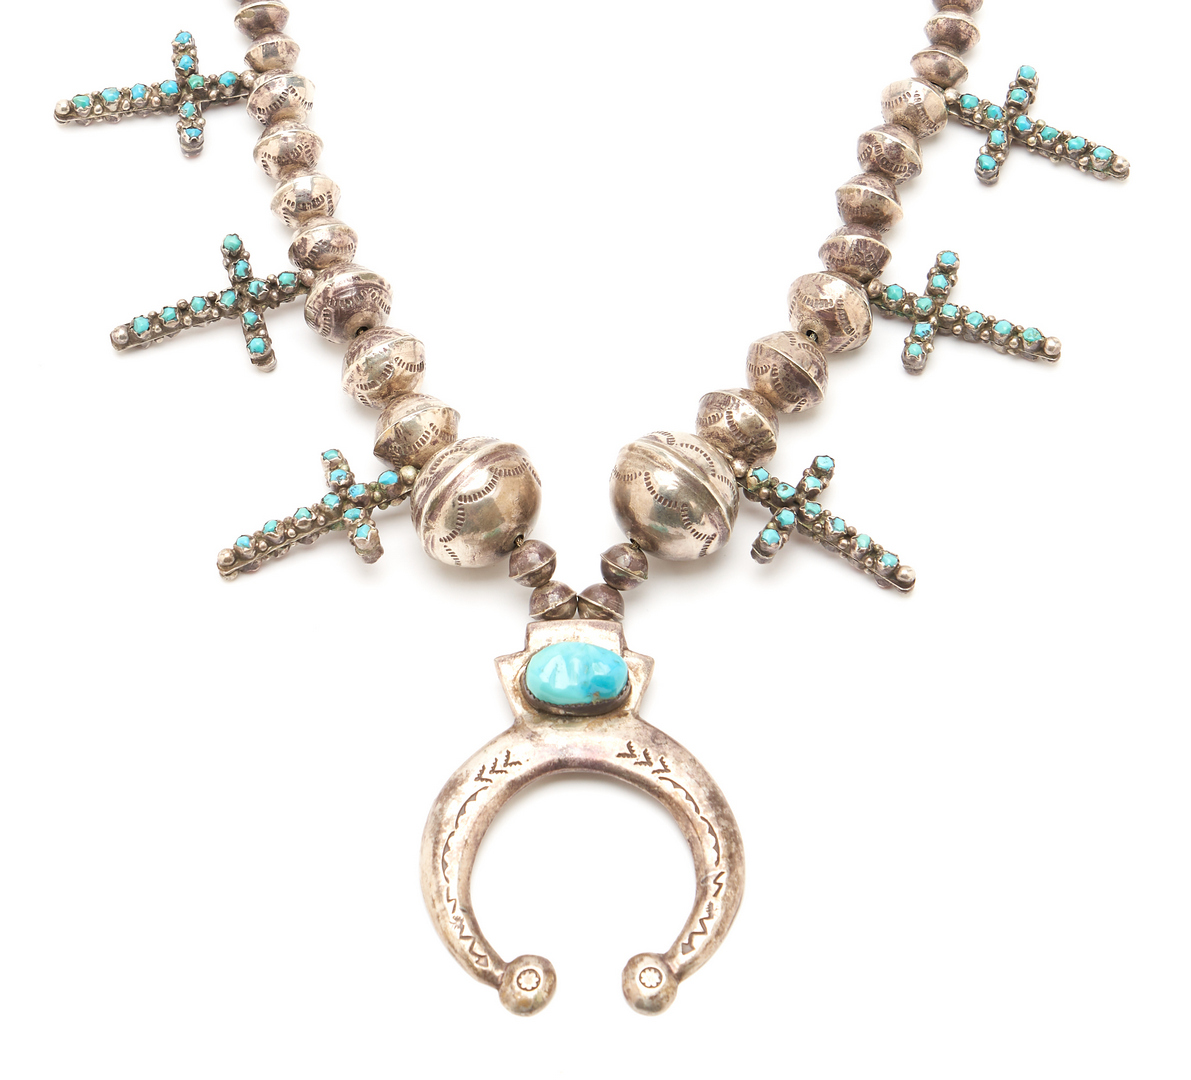 Lot 504: 3 Navajo Multi Stone Jewelry Items, incl. Cross Squash Blossom Necklace